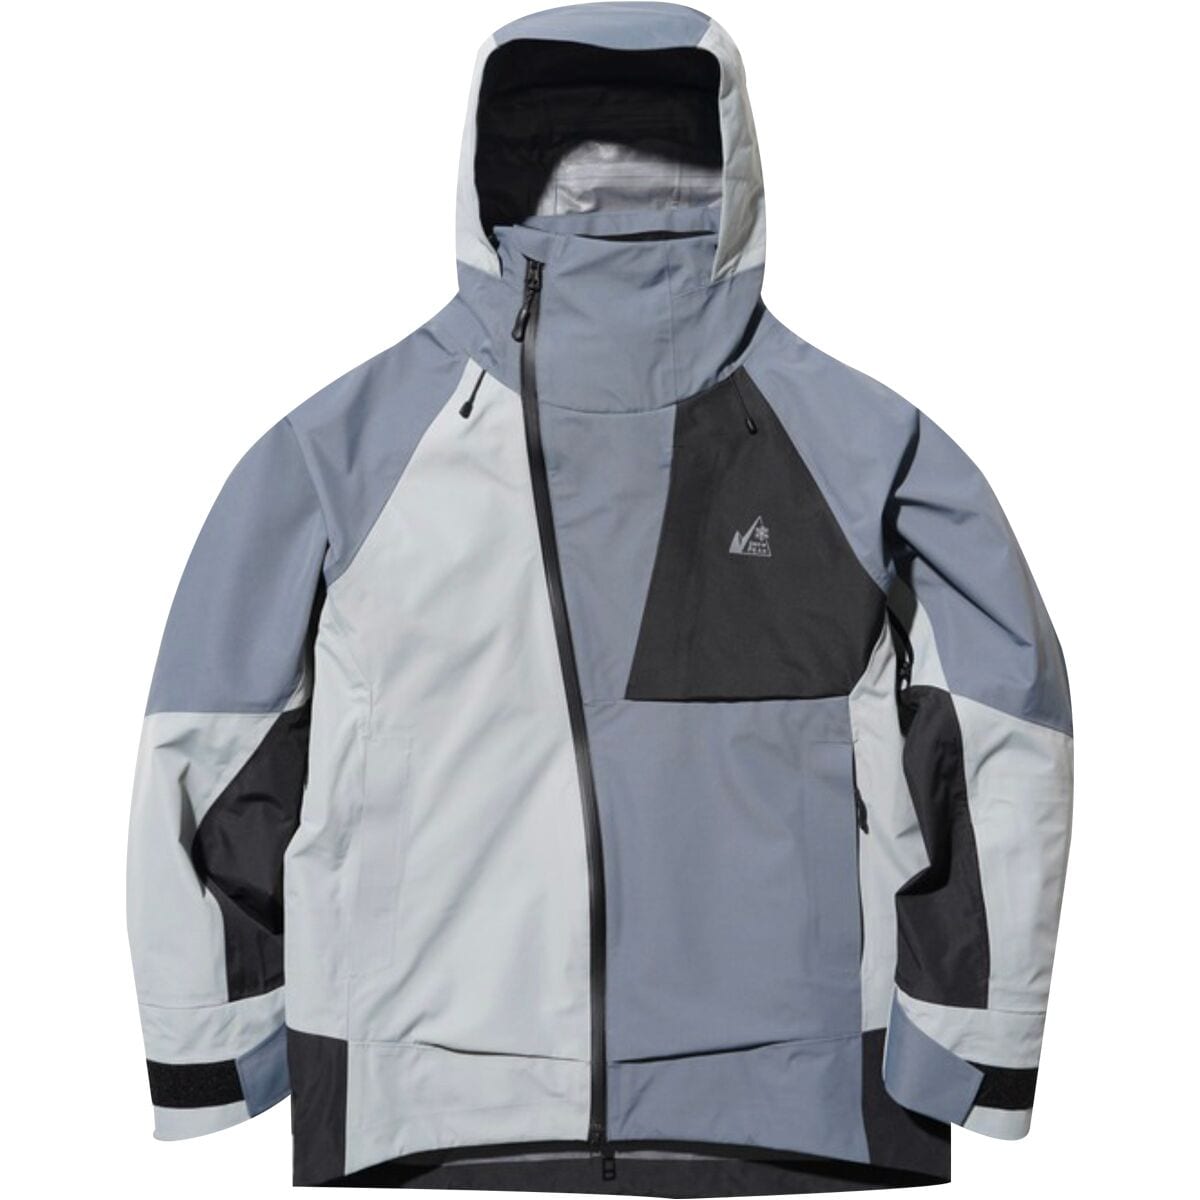 Snow Peak 3L Graphene Jacket - Men's - Clothing